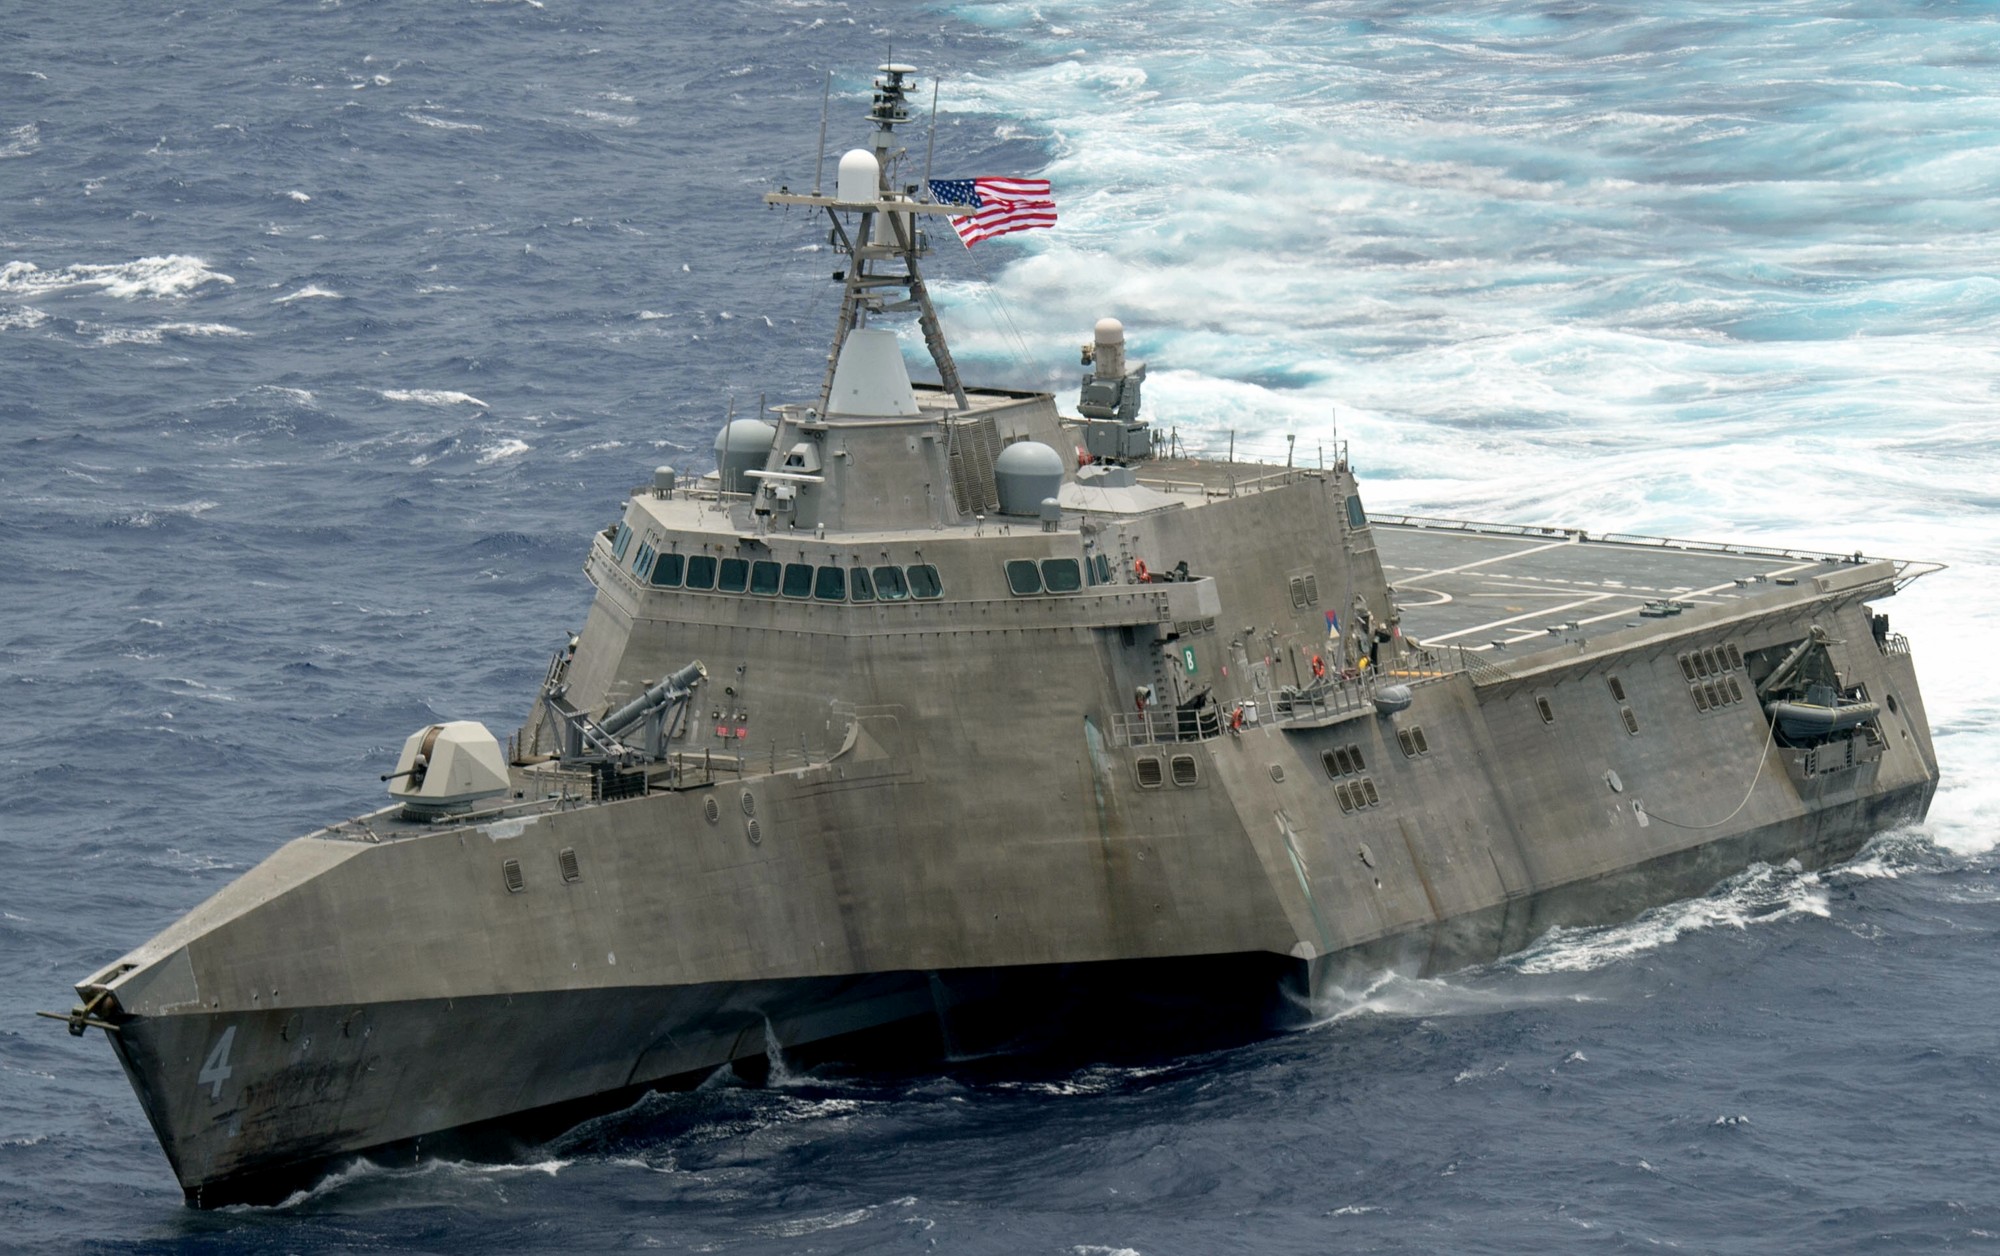 lcs-4 uss coronado independence class littoral combat ship us navy 14